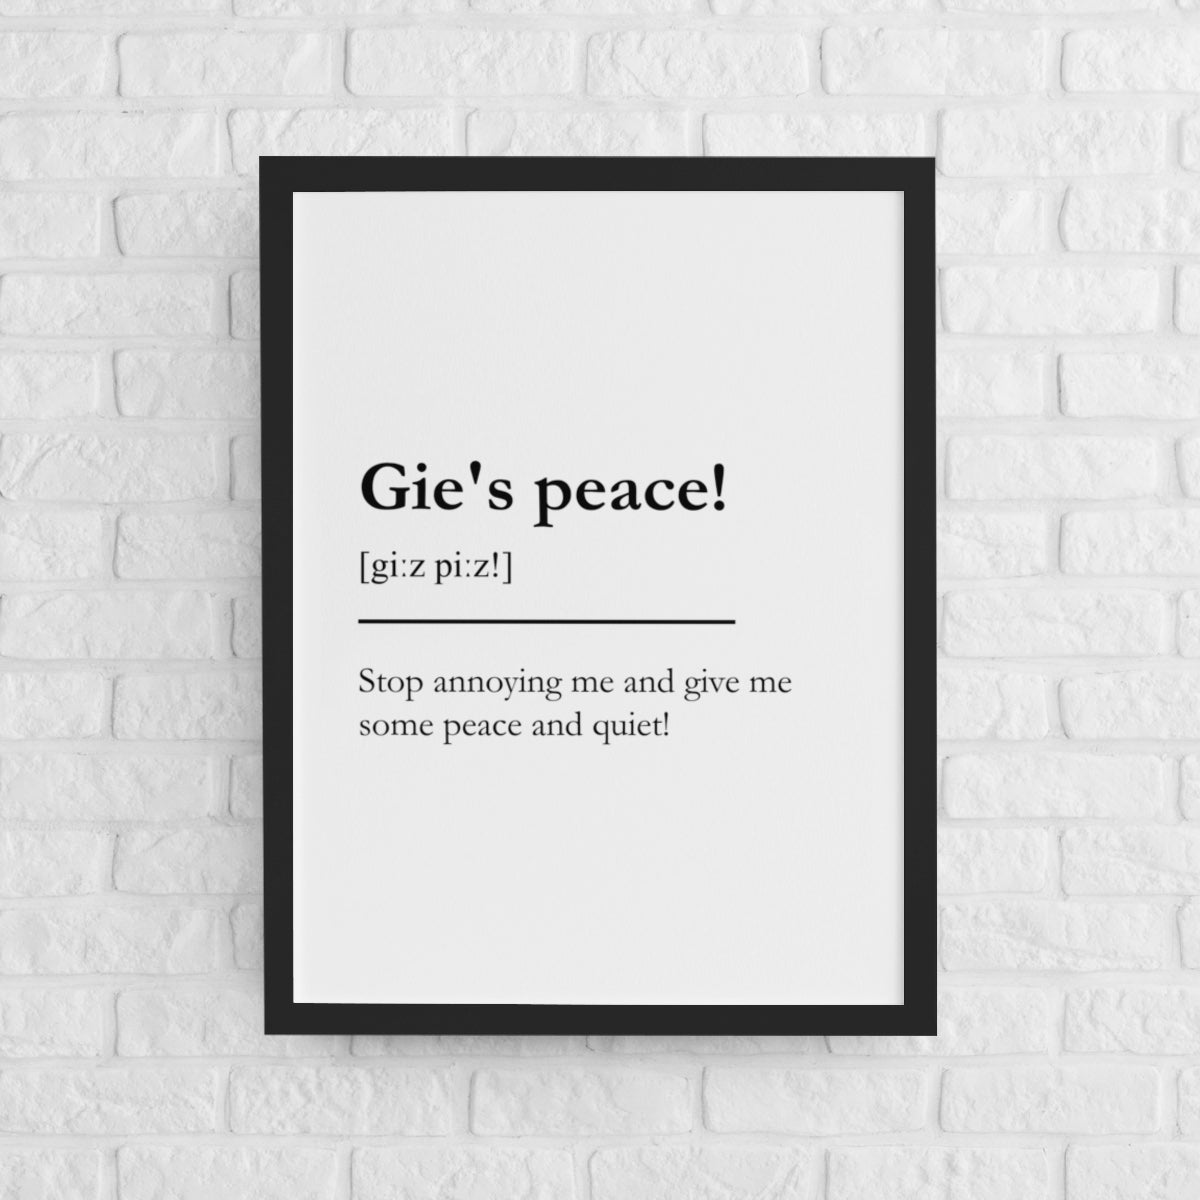 "Gie's peace!" - Scottish Slang